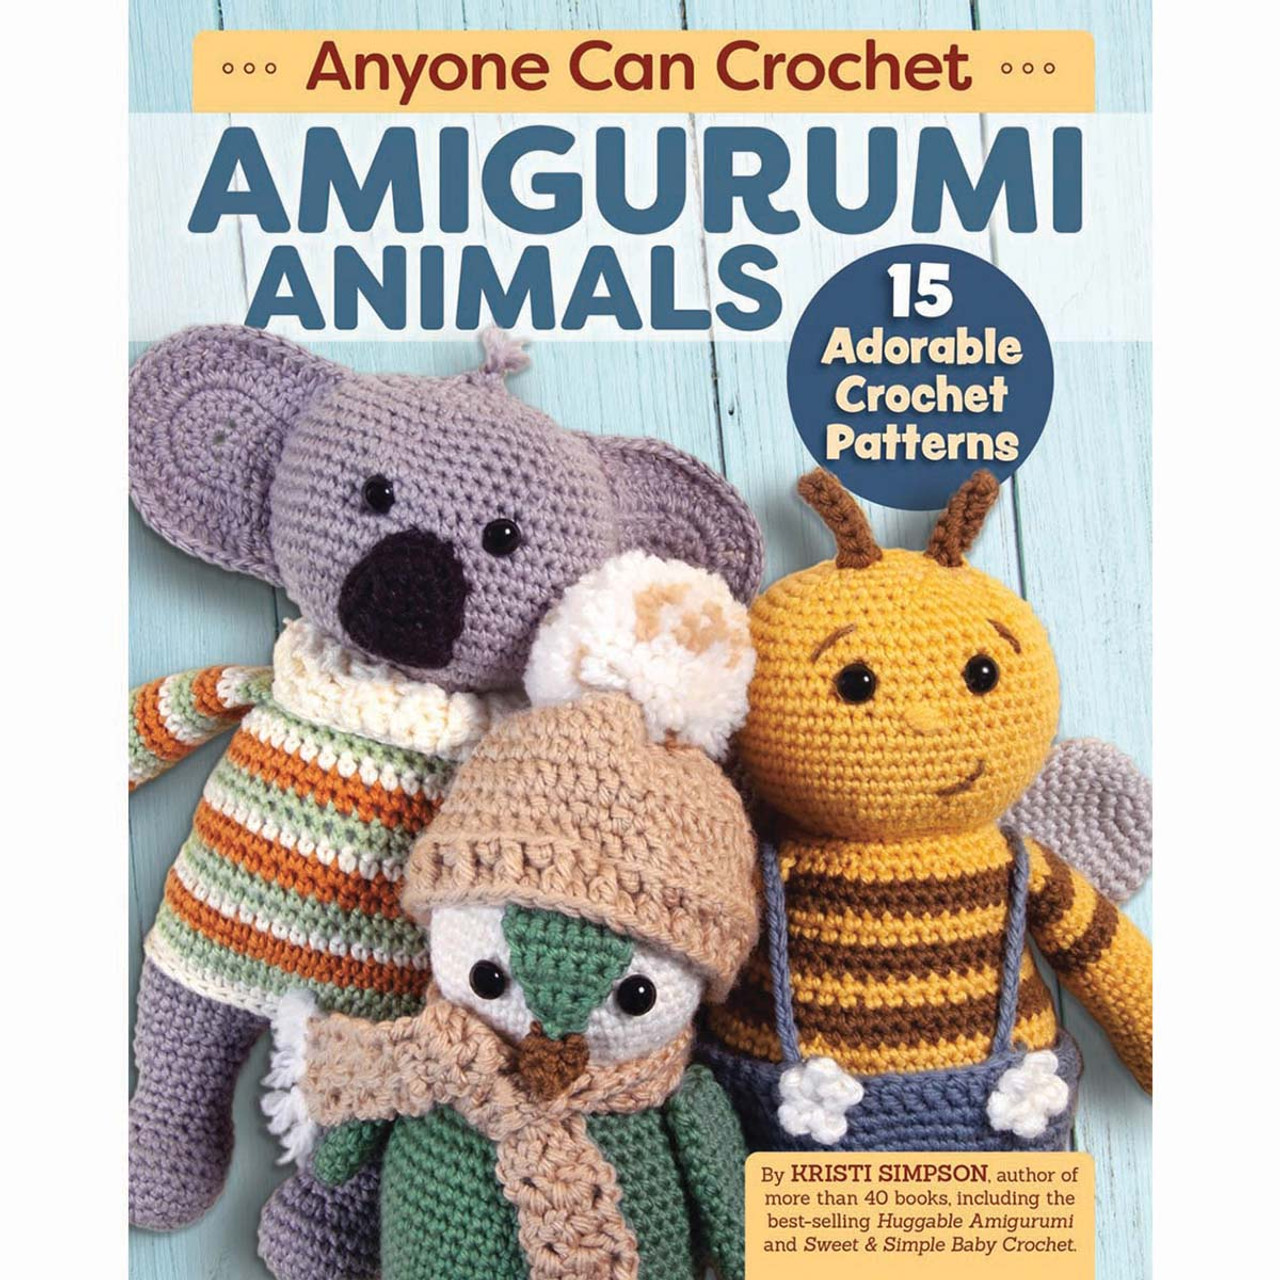 Leisure Arts Little Crochet Friend Animals Crochet Kit, Bunny, 8, Complete Crochet  kit, Learn to Crochet Animal Starter kit for All Ages, Includes  Instructions, DIY amigurumi Crochet Kits